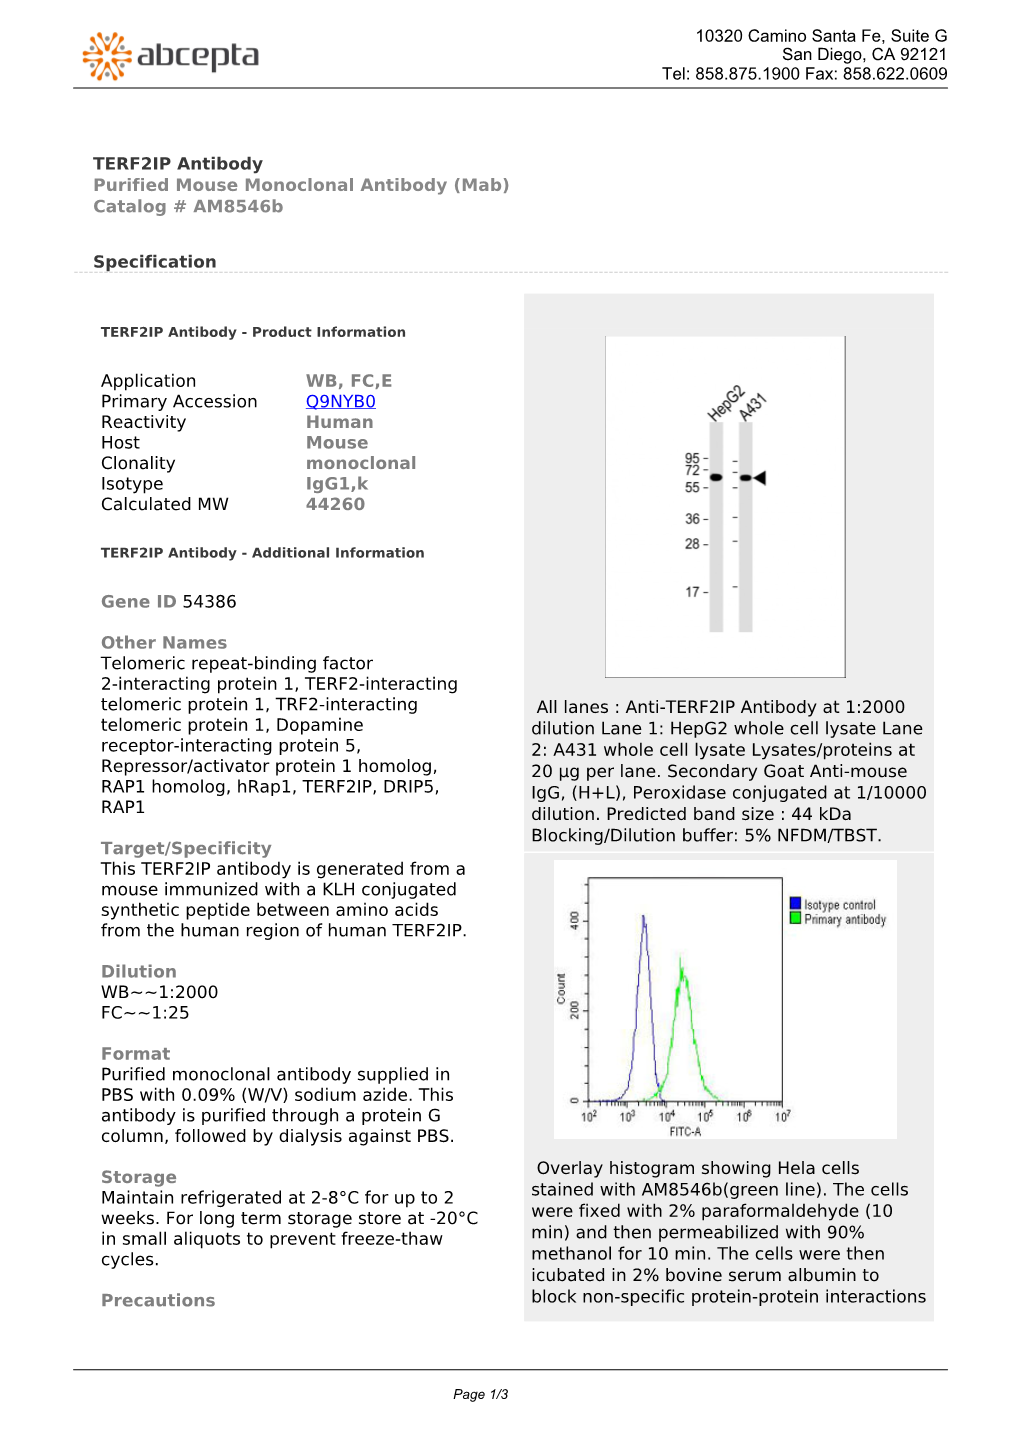 TERF2IP Antibody Purified Mouse Monoclonal Antibody (Mab) Catalog # Am8546b